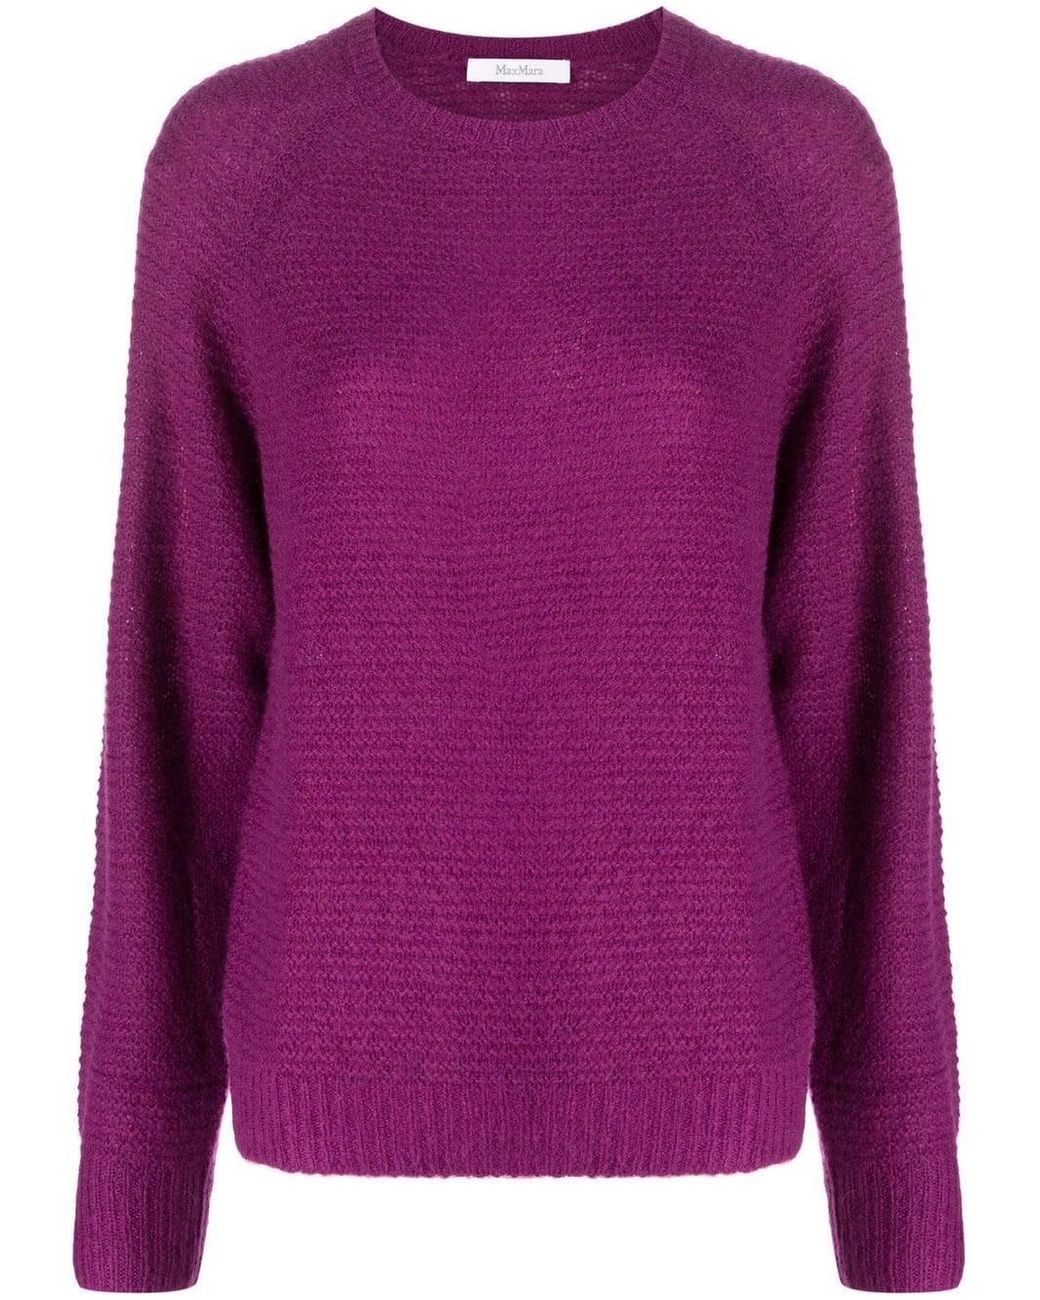 Max Mara Jumbo Cashmere And Silk Sweater in Purple | Lyst